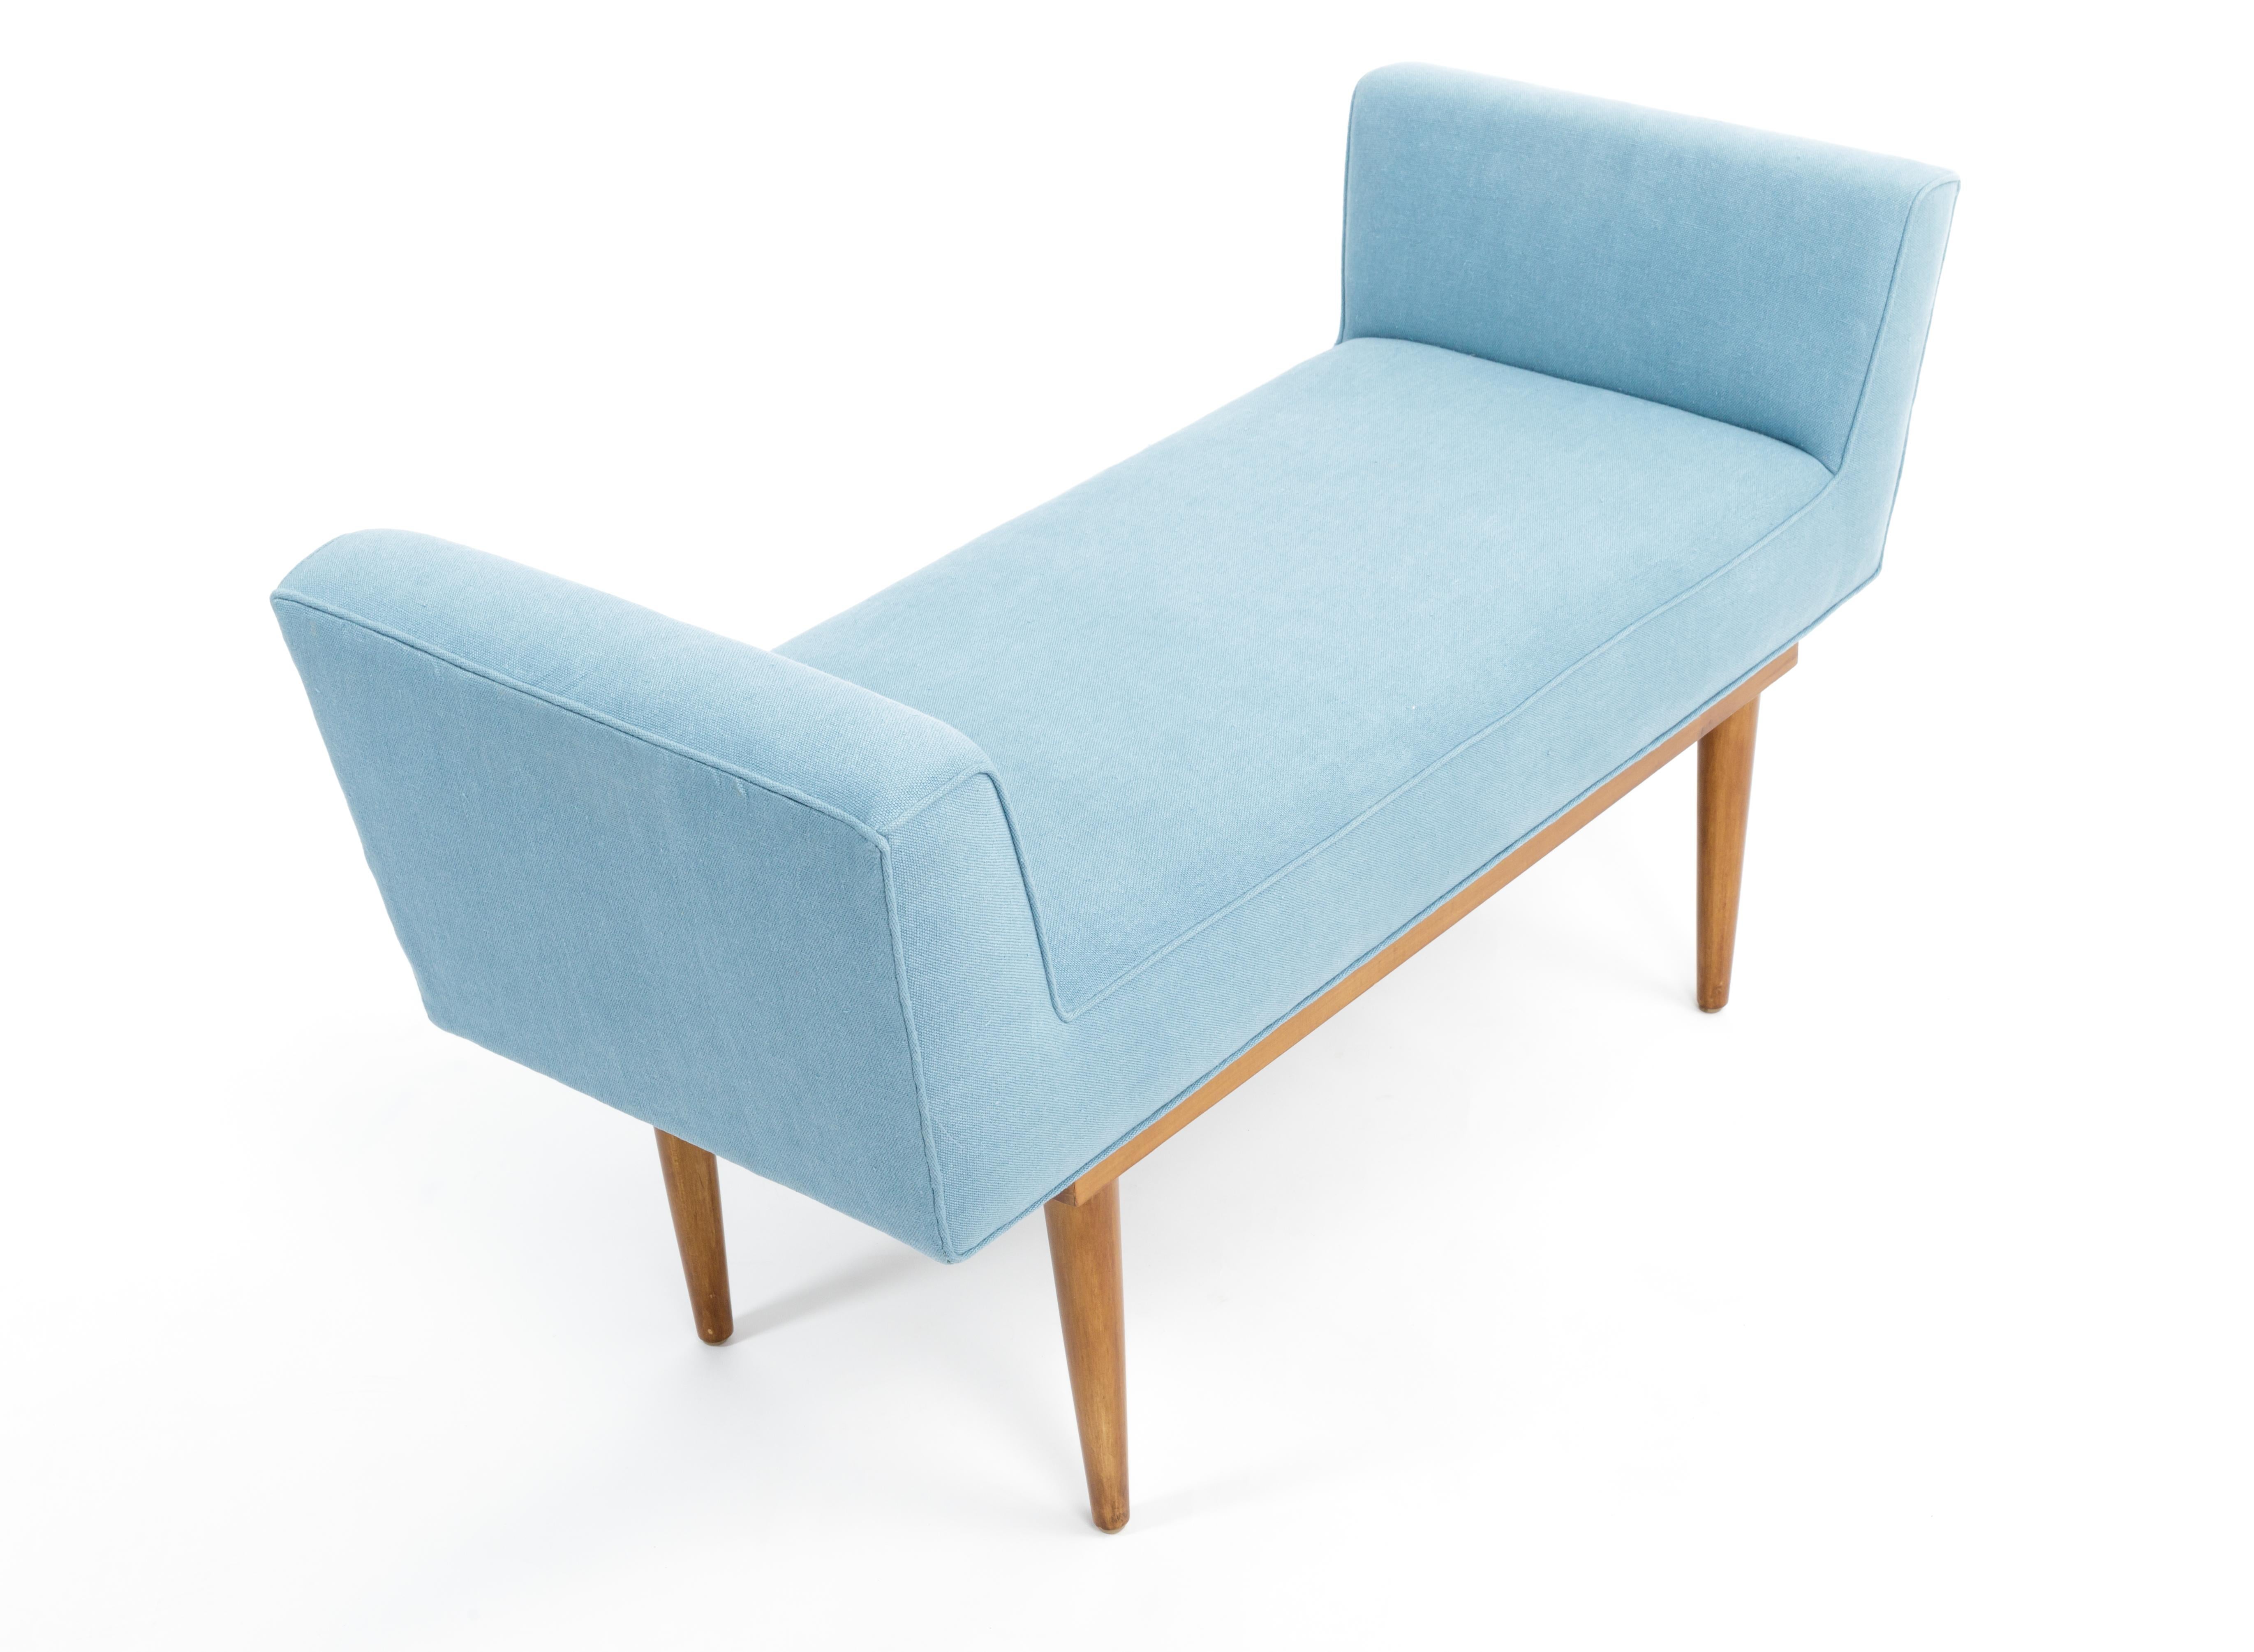 20th Century Mid-Century Boudoir Bench Upholstered in a Denim Blue Linen